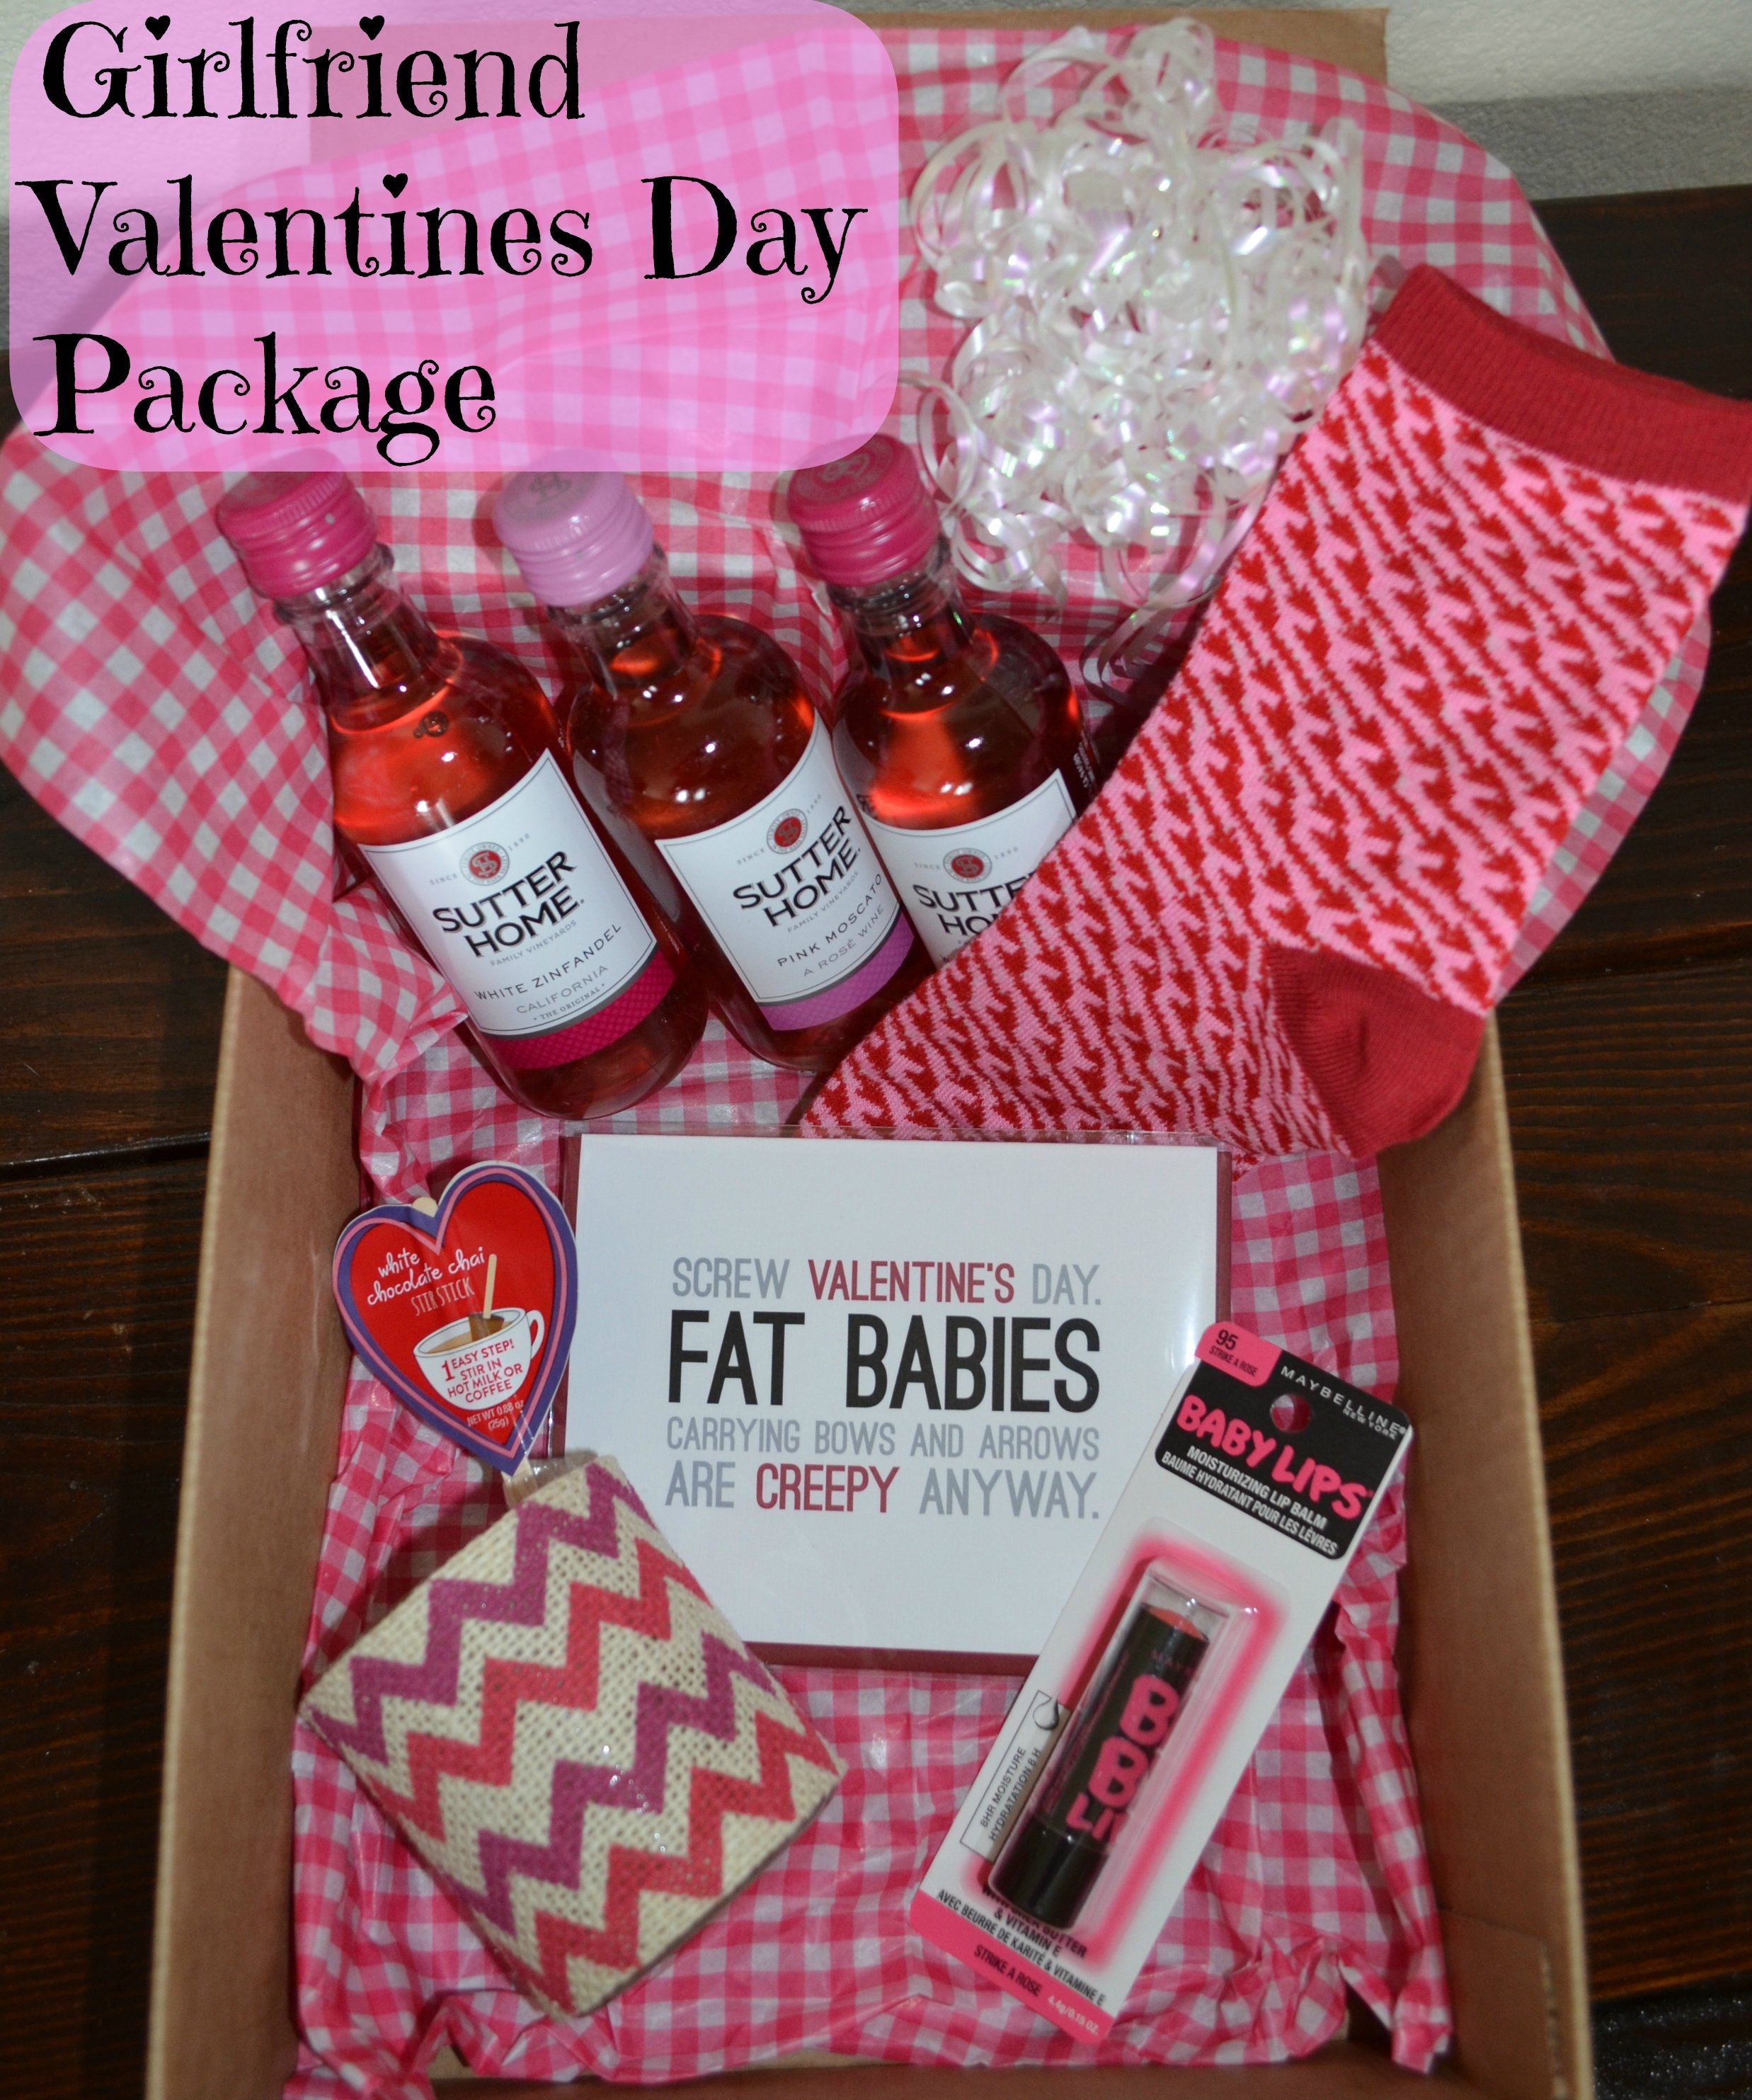 10 Fantastic Gift Ideas For Boyfriend Valentines Day valentines day ideas him creative valentine gifts crafthubs dma 4 2022